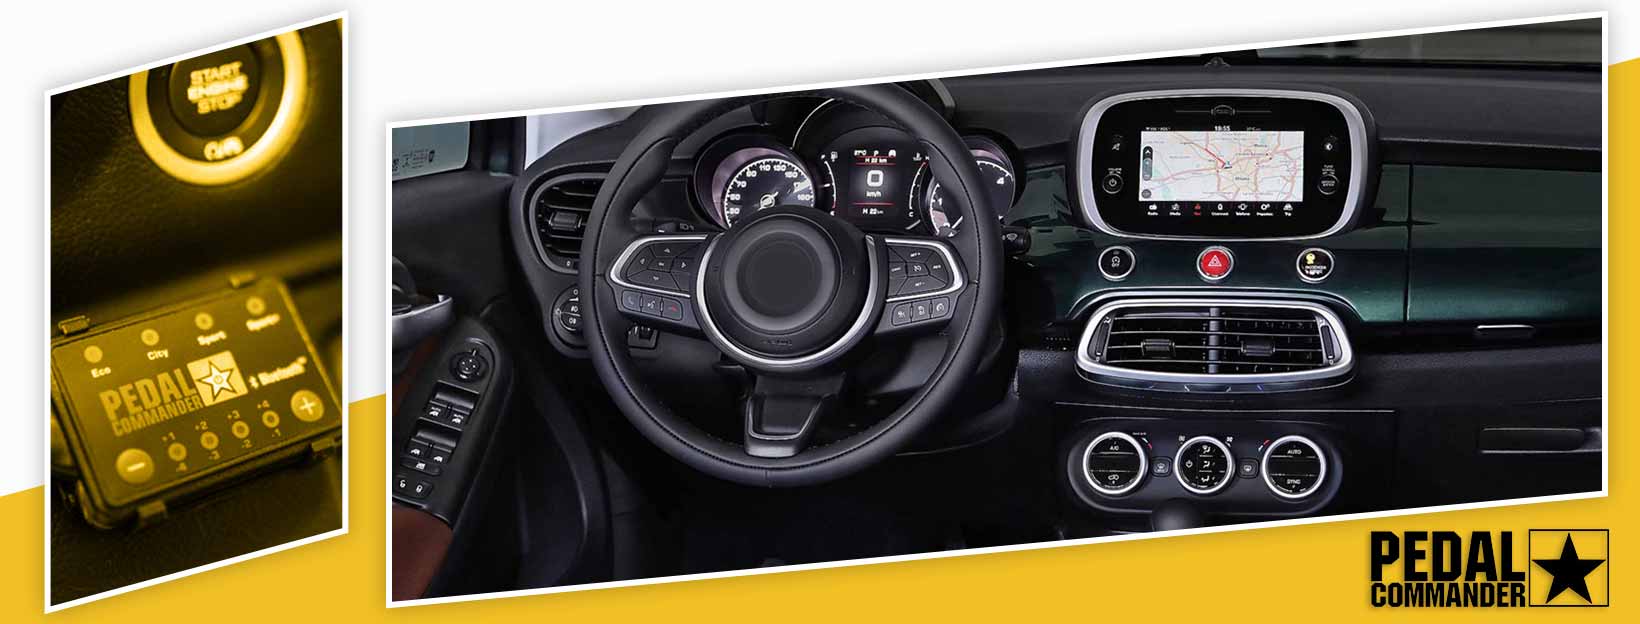 Pedal Commander for Fiat 500x - interior